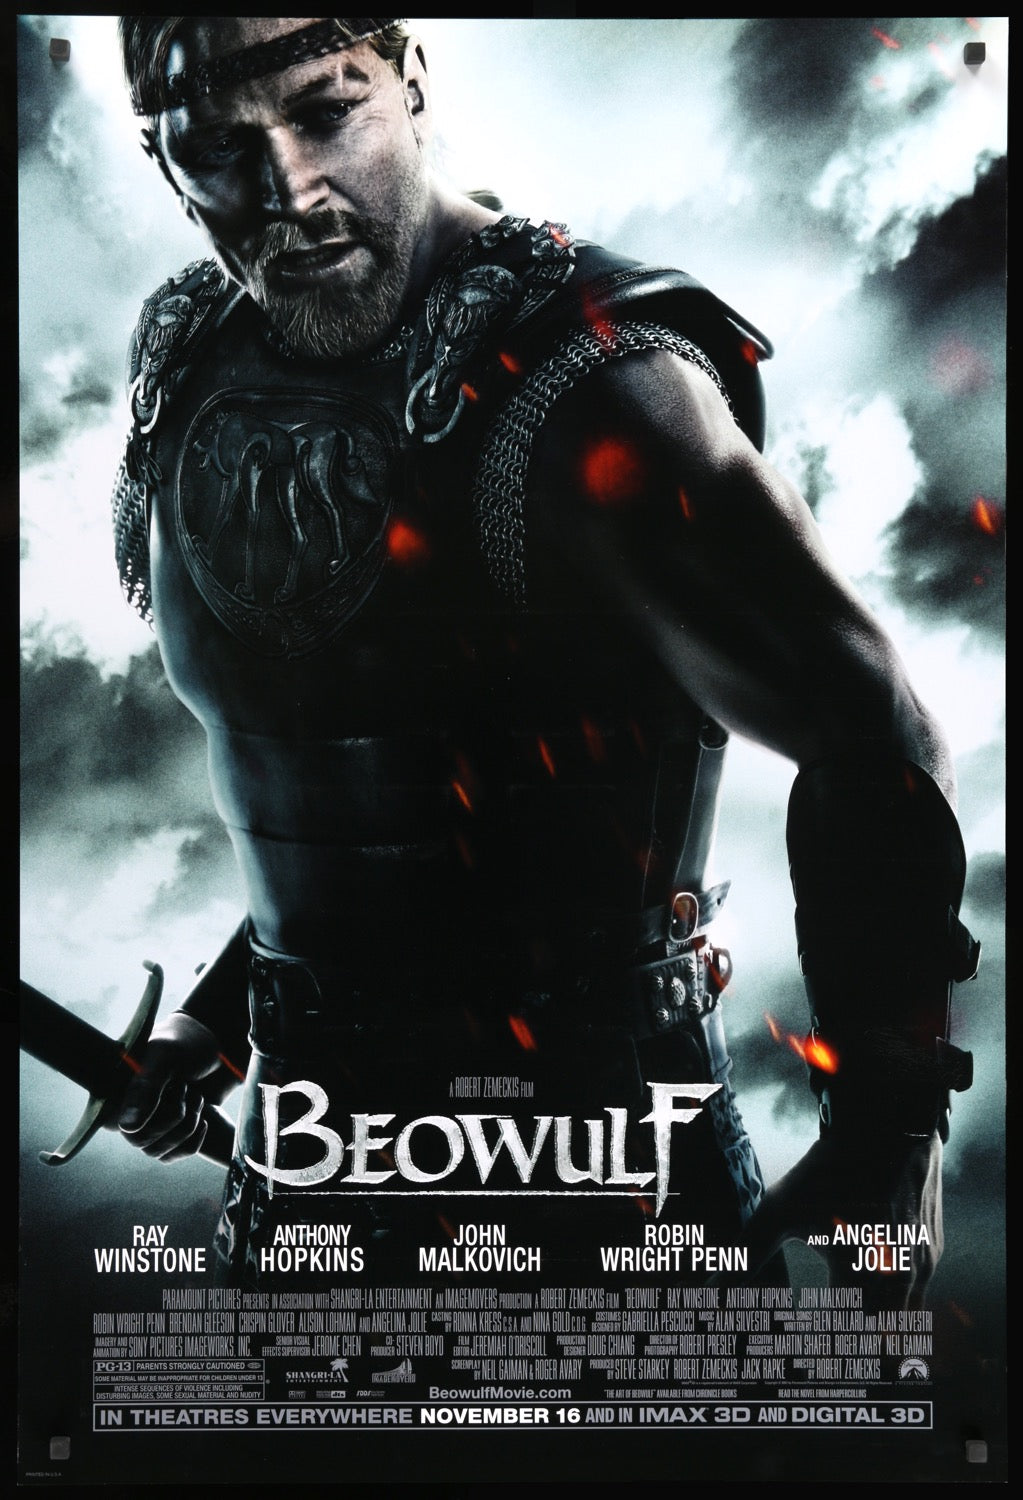 Beowulf (2007) original movie poster for sale at Original Film Art